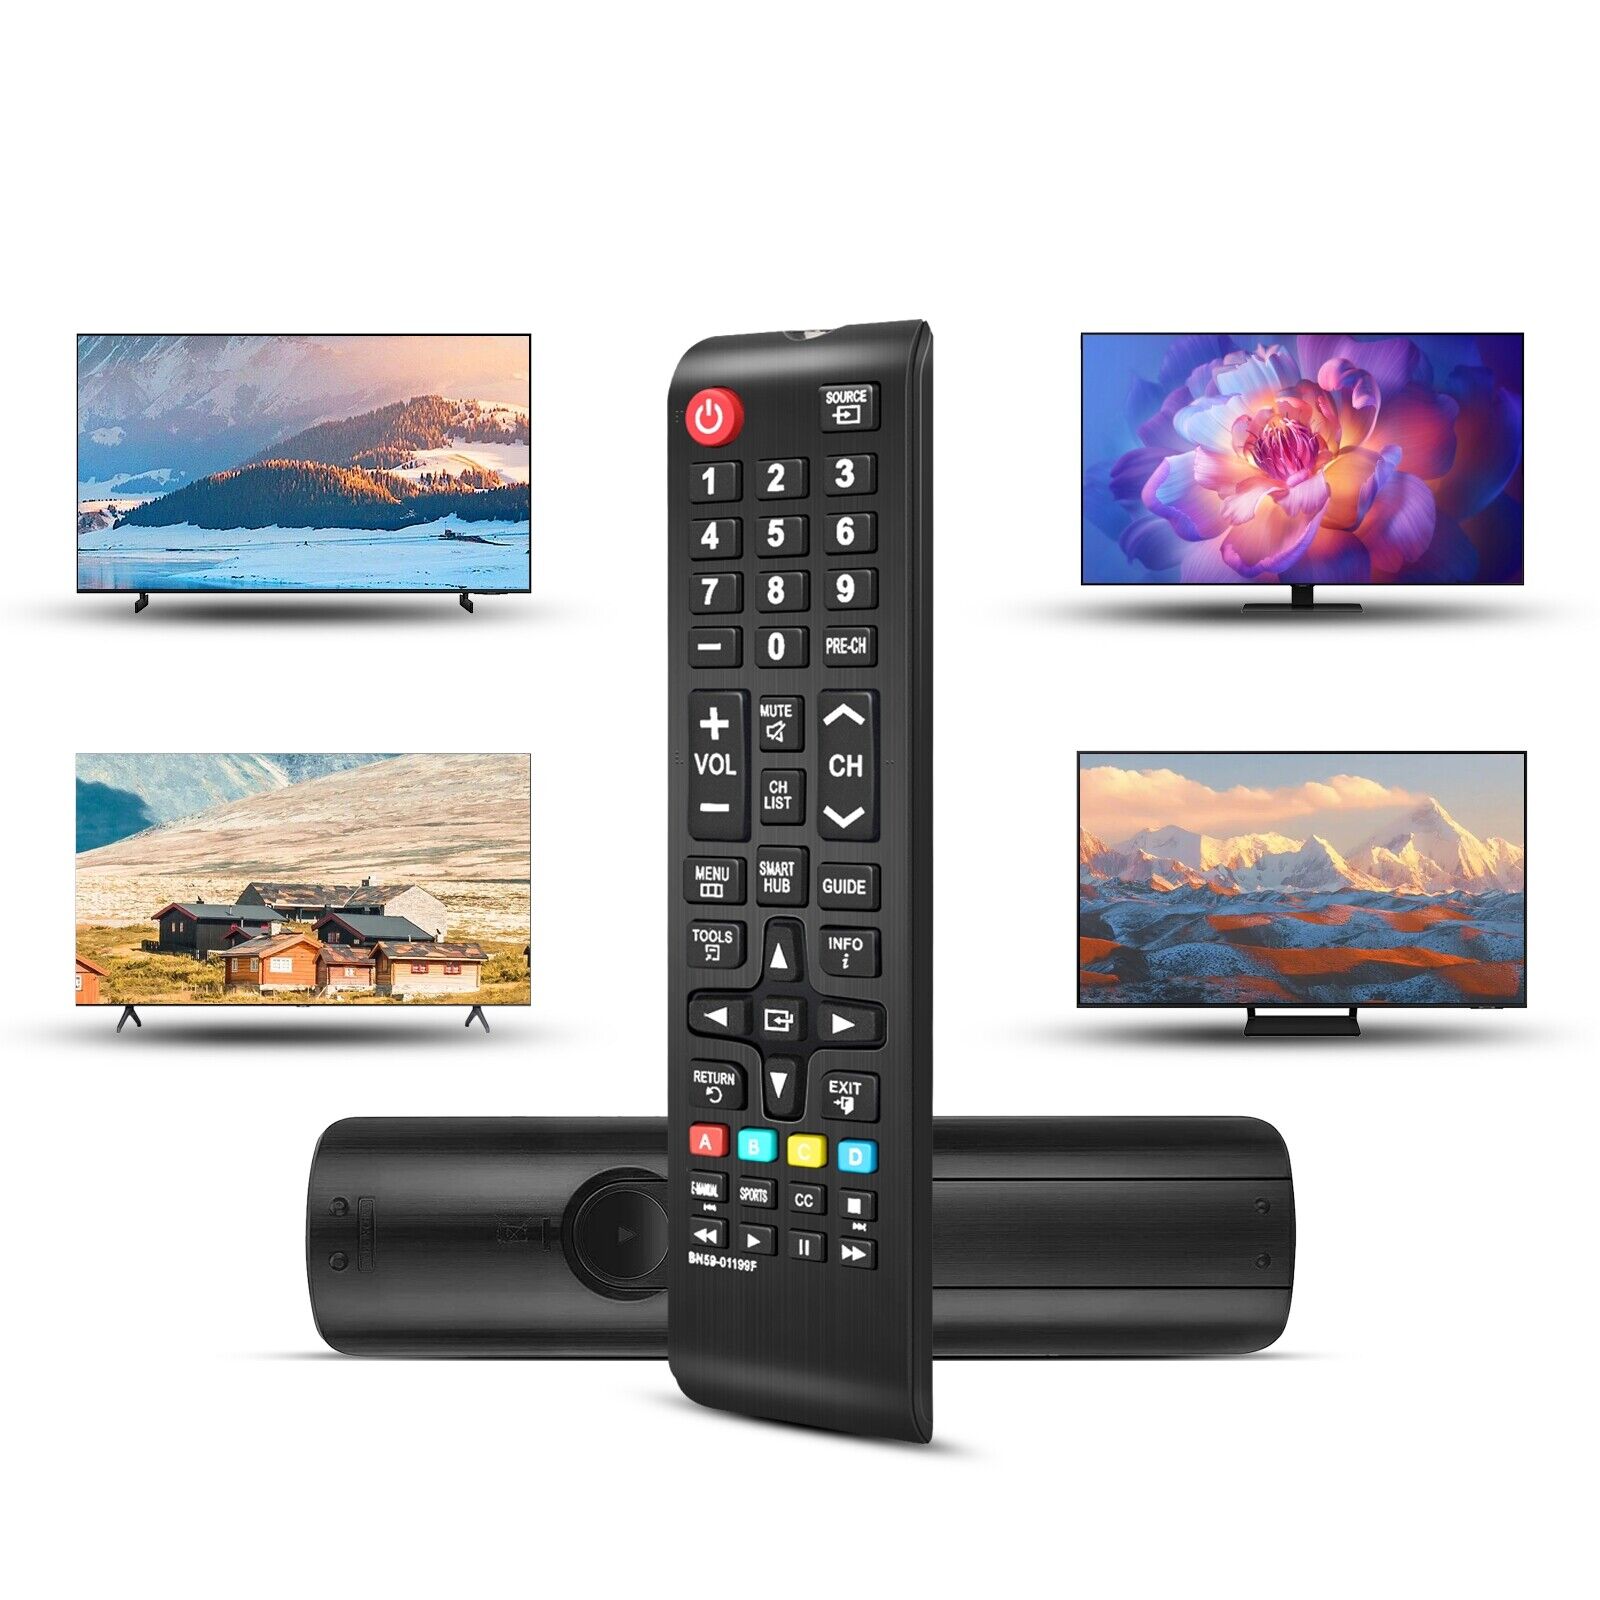 Samsung Remote Control (BN59-01301A) for Select Samsung TVs - Black